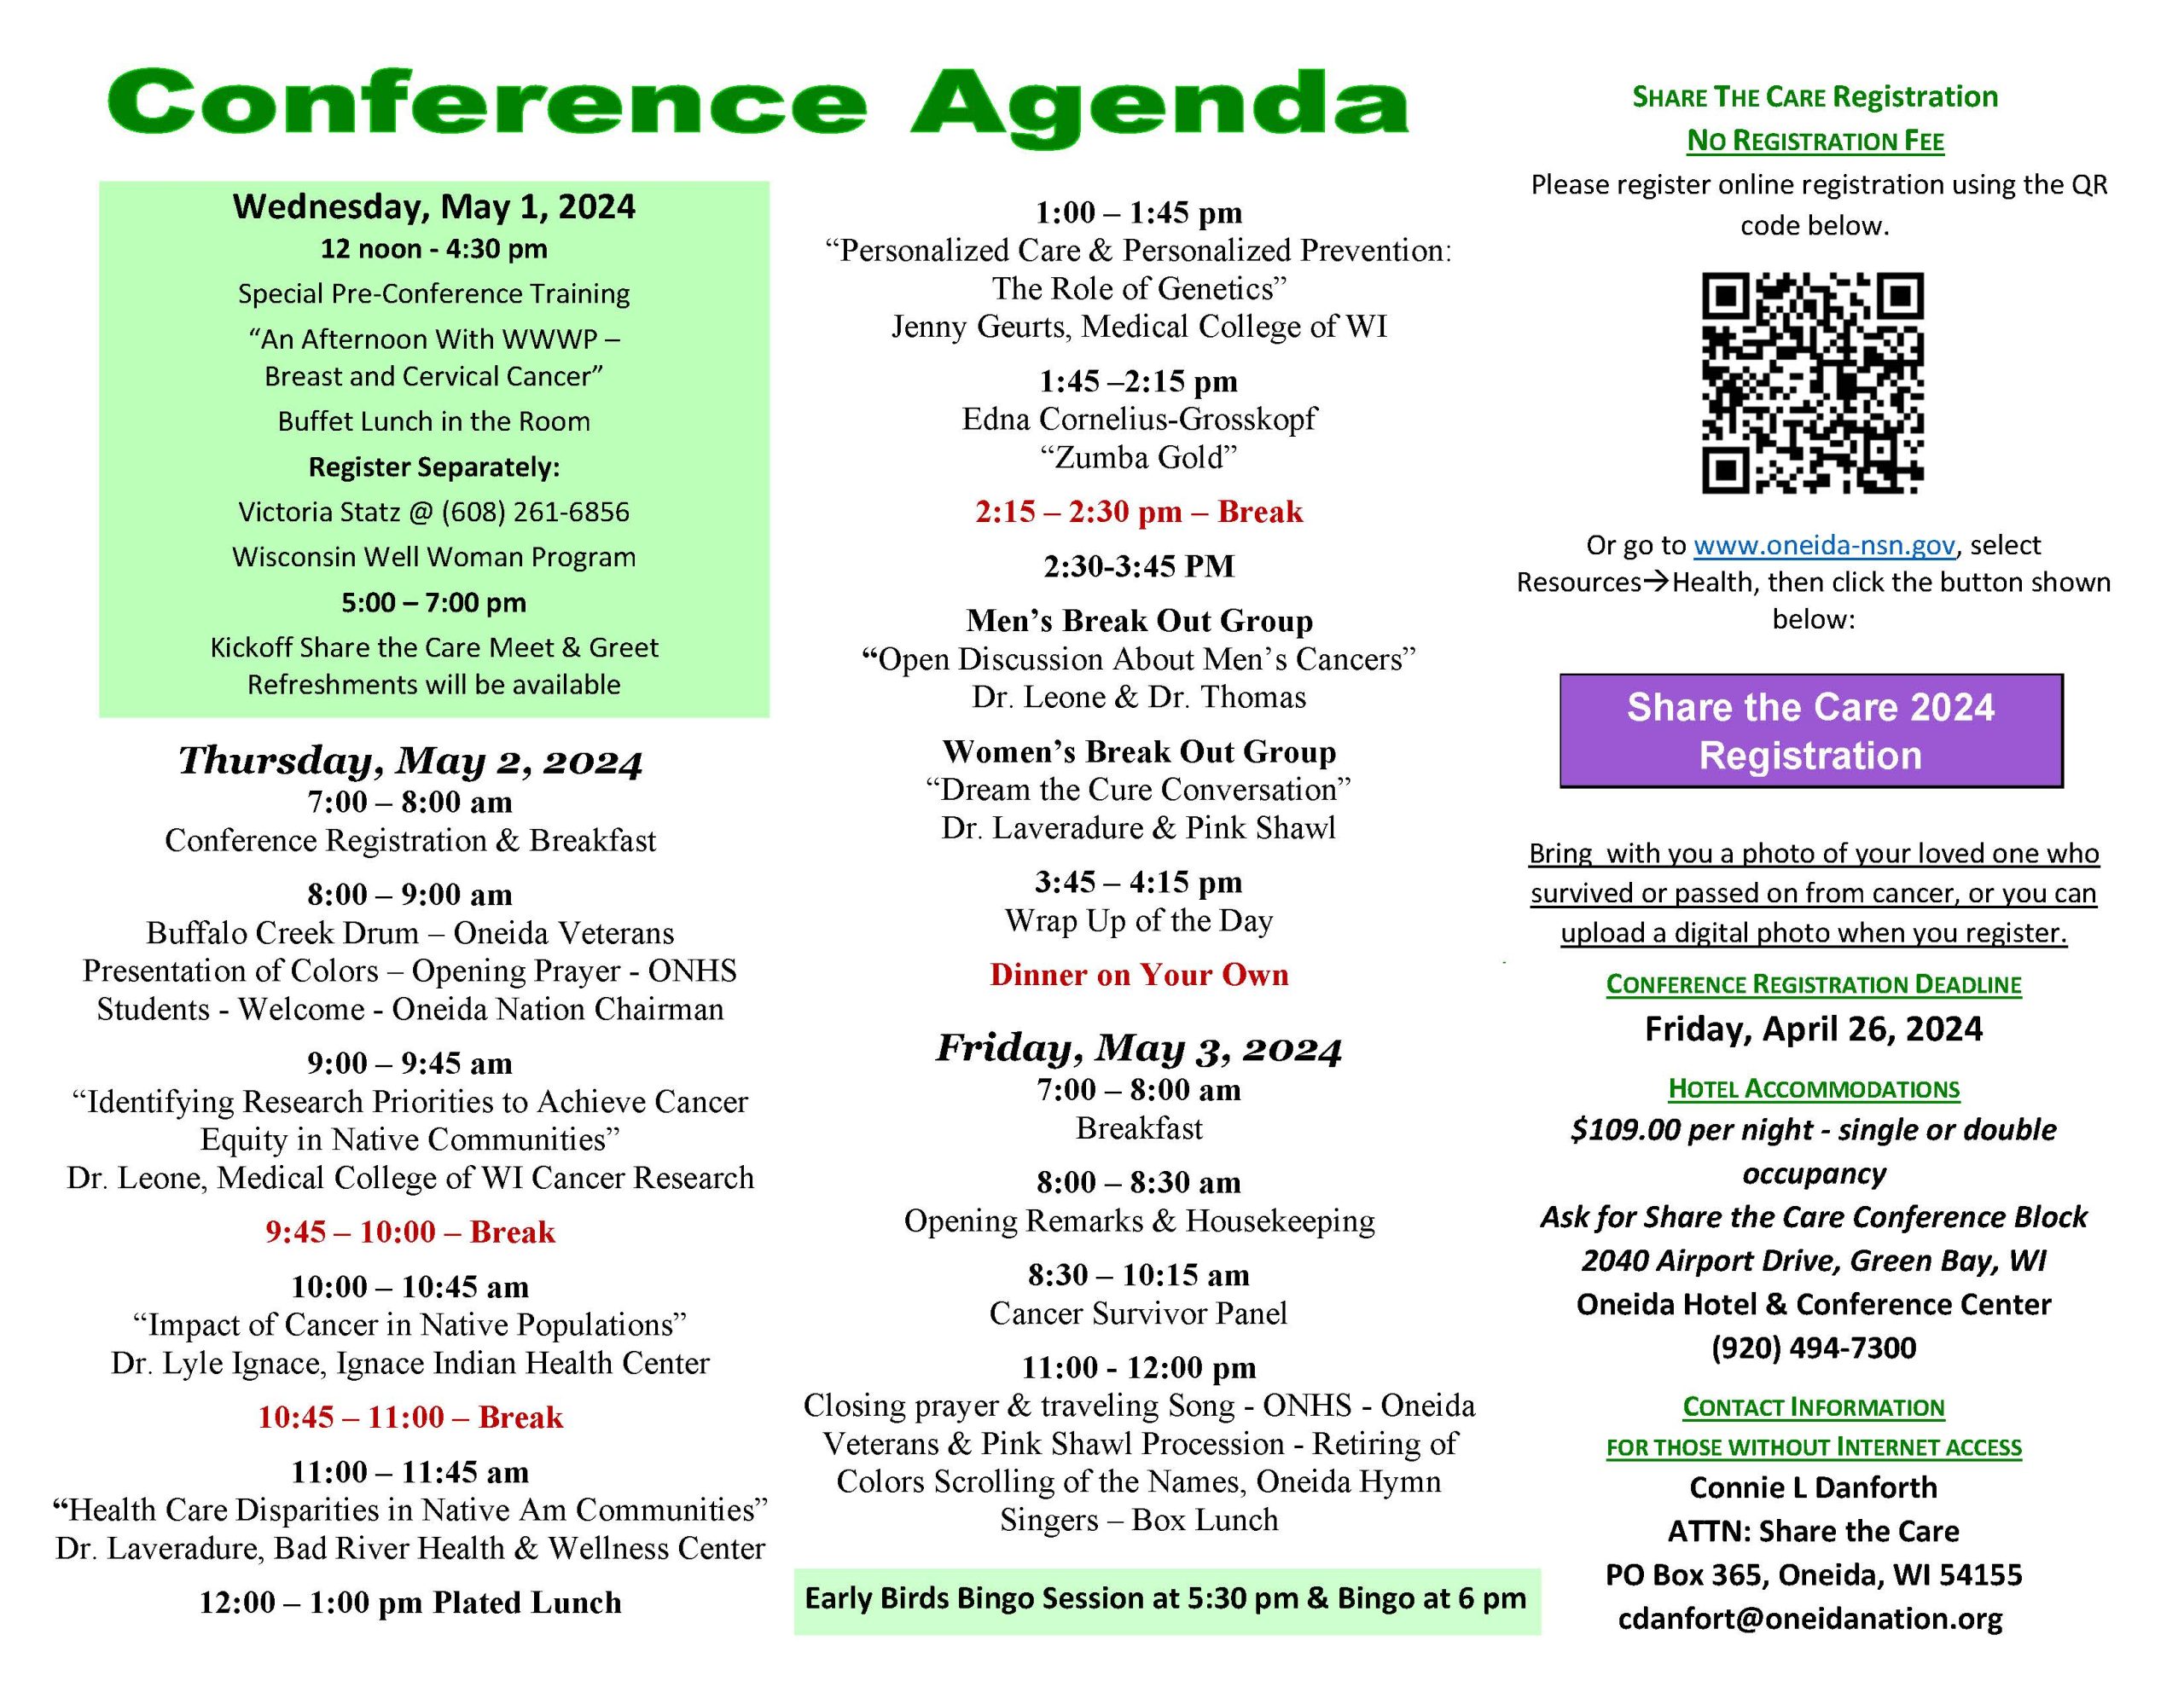 Conference Agenda Rev. 3 26 24.docx